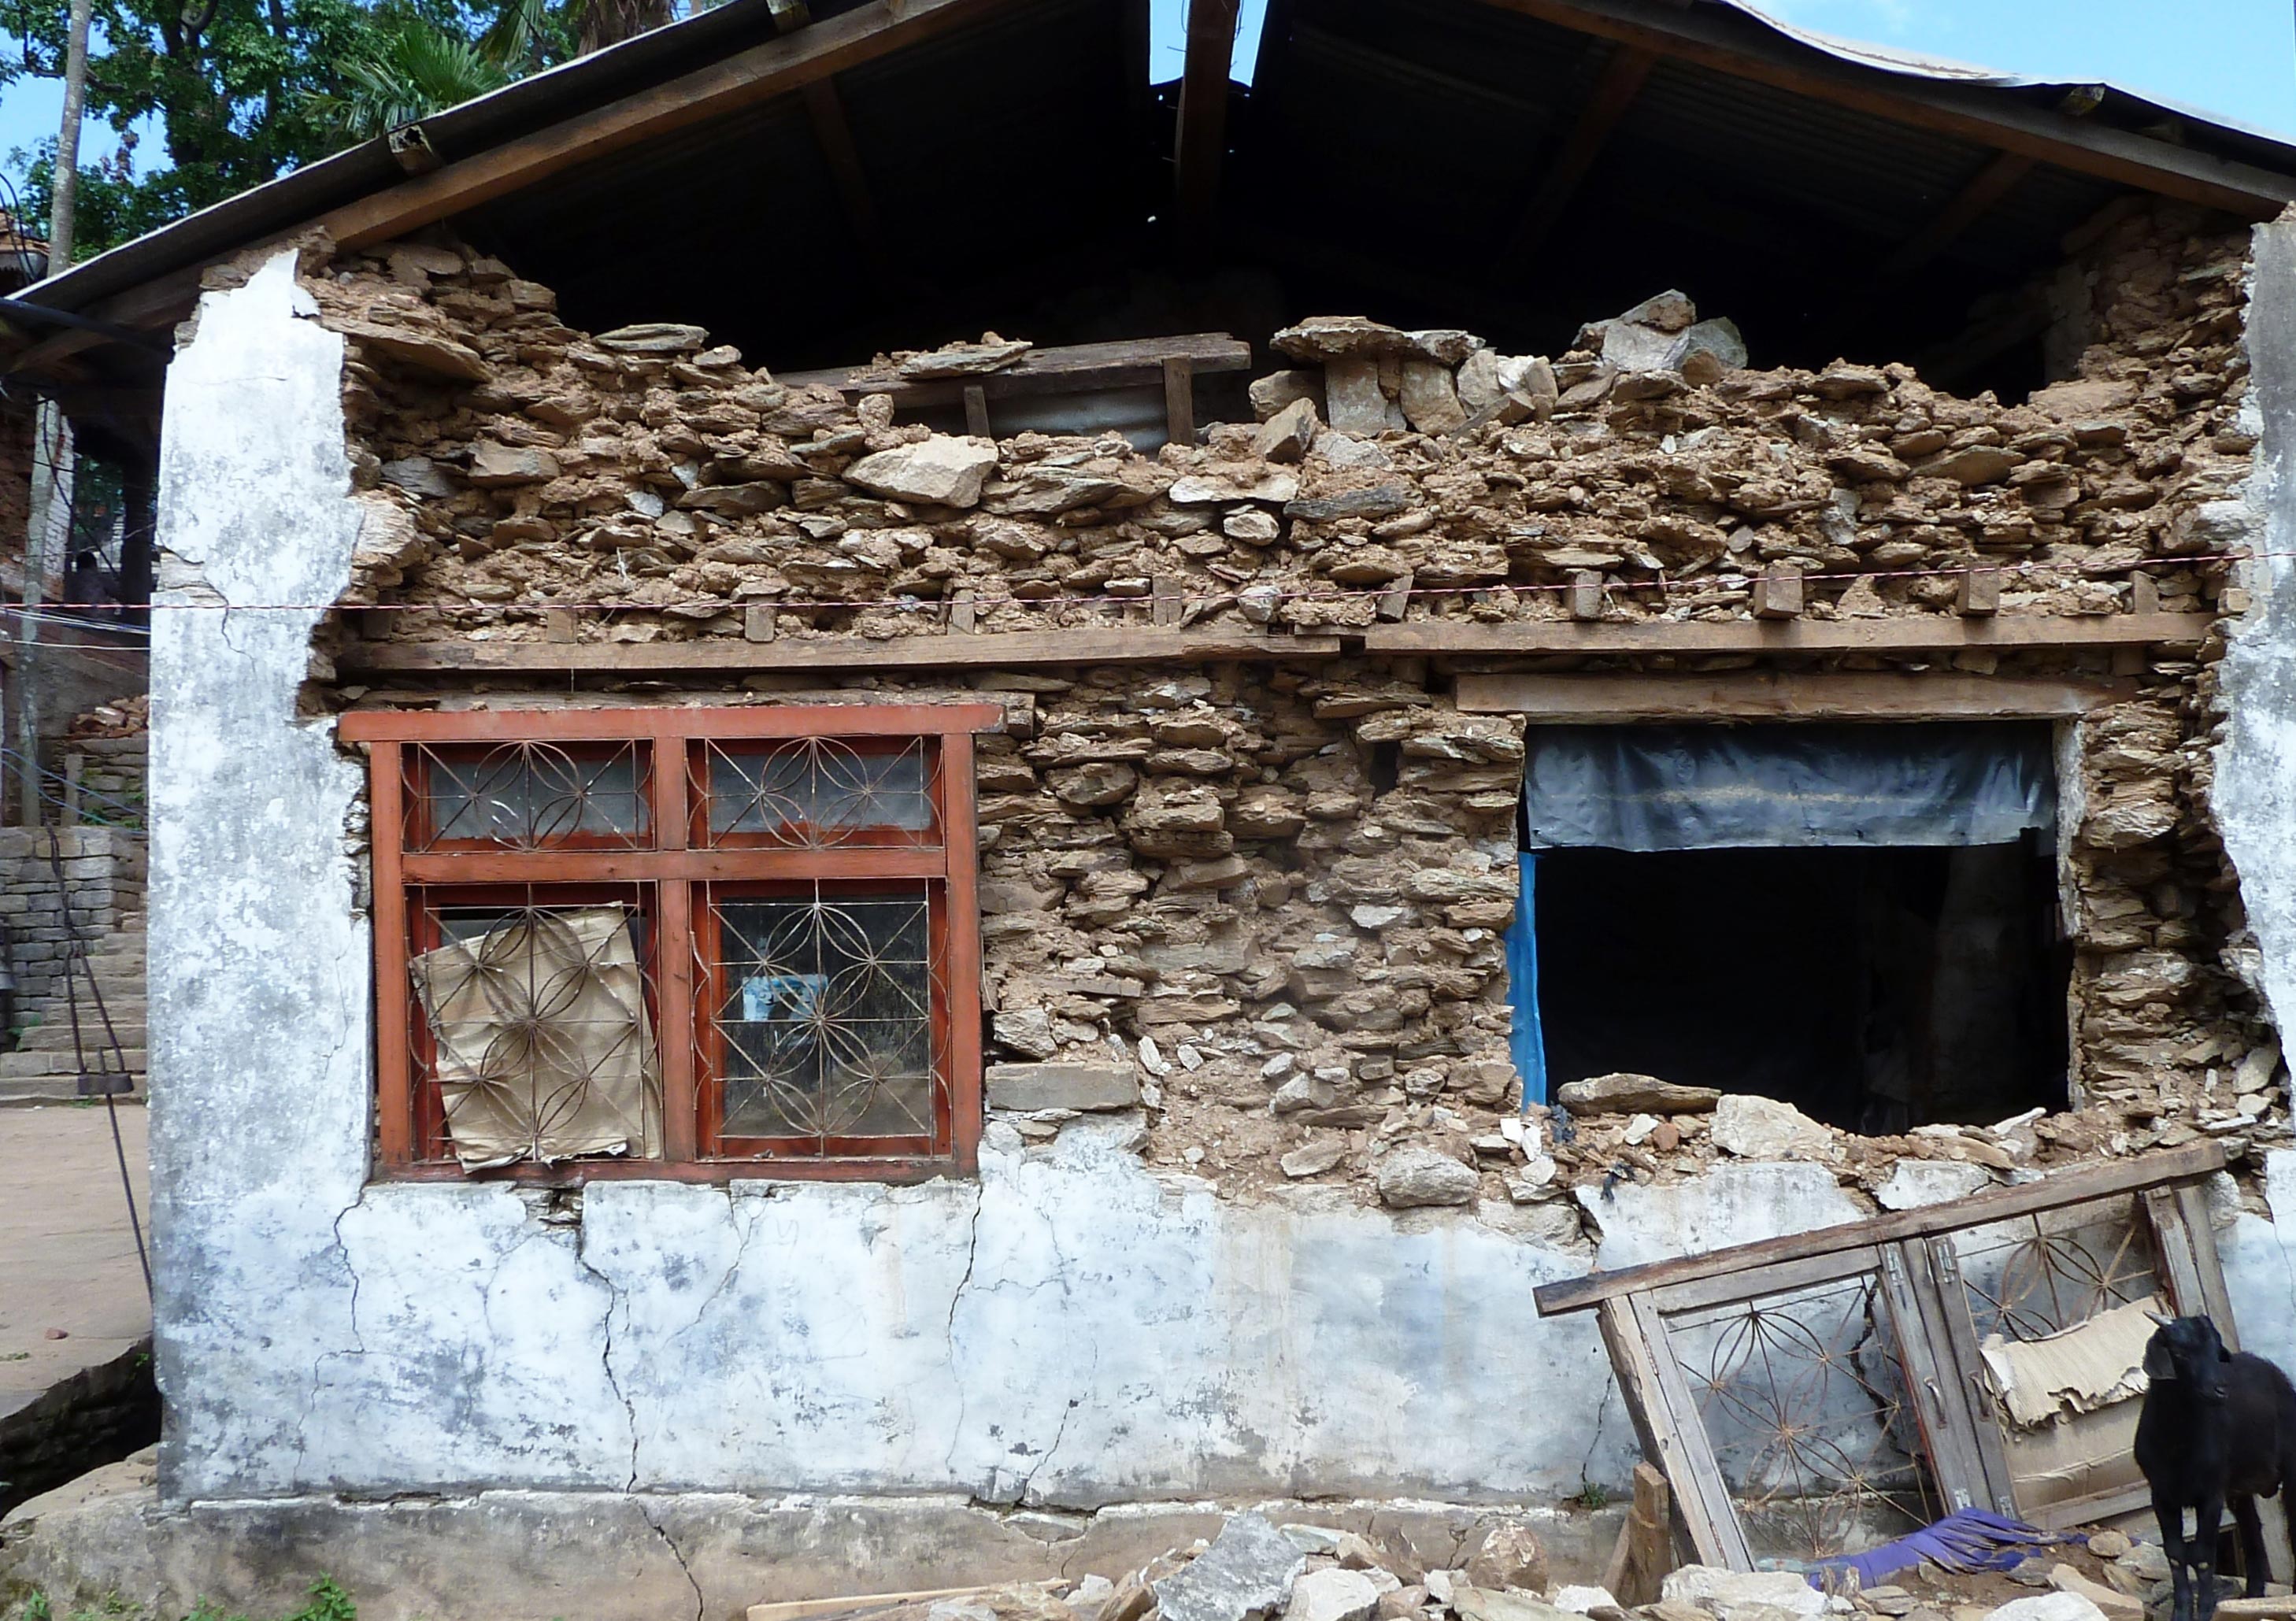 Nepal - Stone Masonry Houses Seismic Construction Guidelines